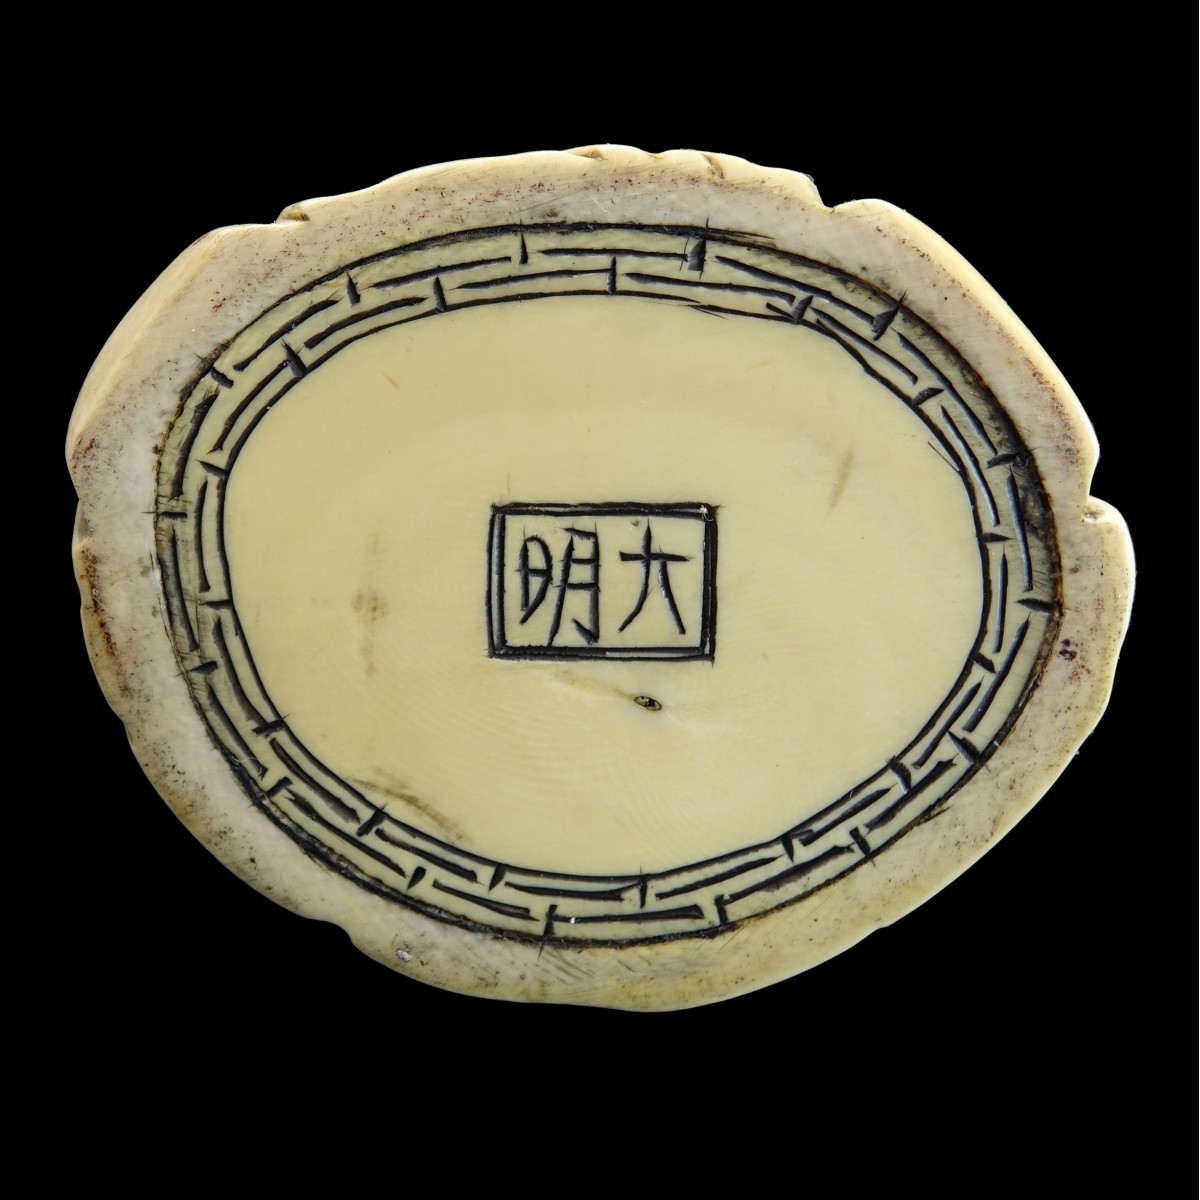 Antique Chinese Ivory Figurine